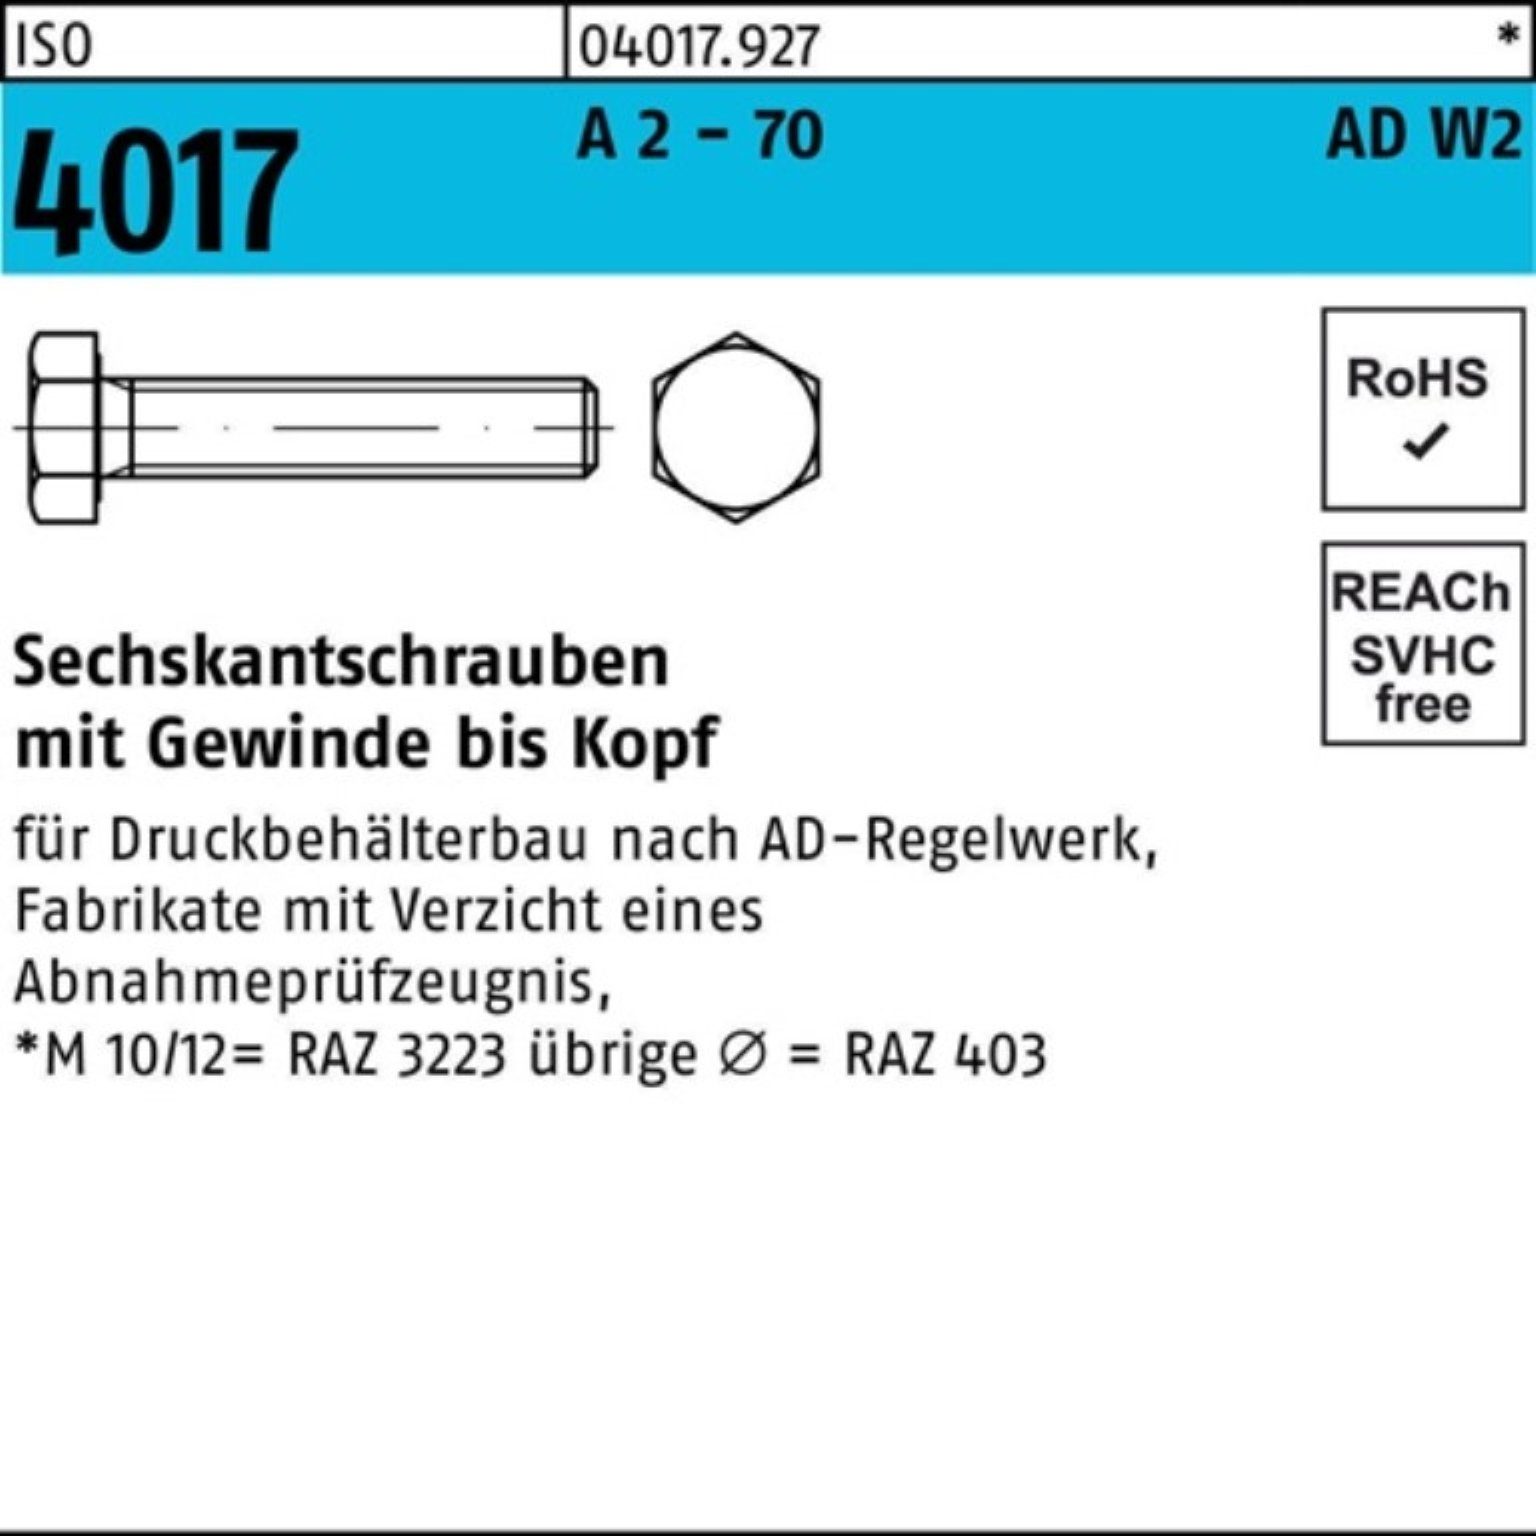 A St 4017 VG 2 Sechskantschraube Bufab ISO 25 70 80 M20x Sechskantschraube AD-W2 Pack - 100er